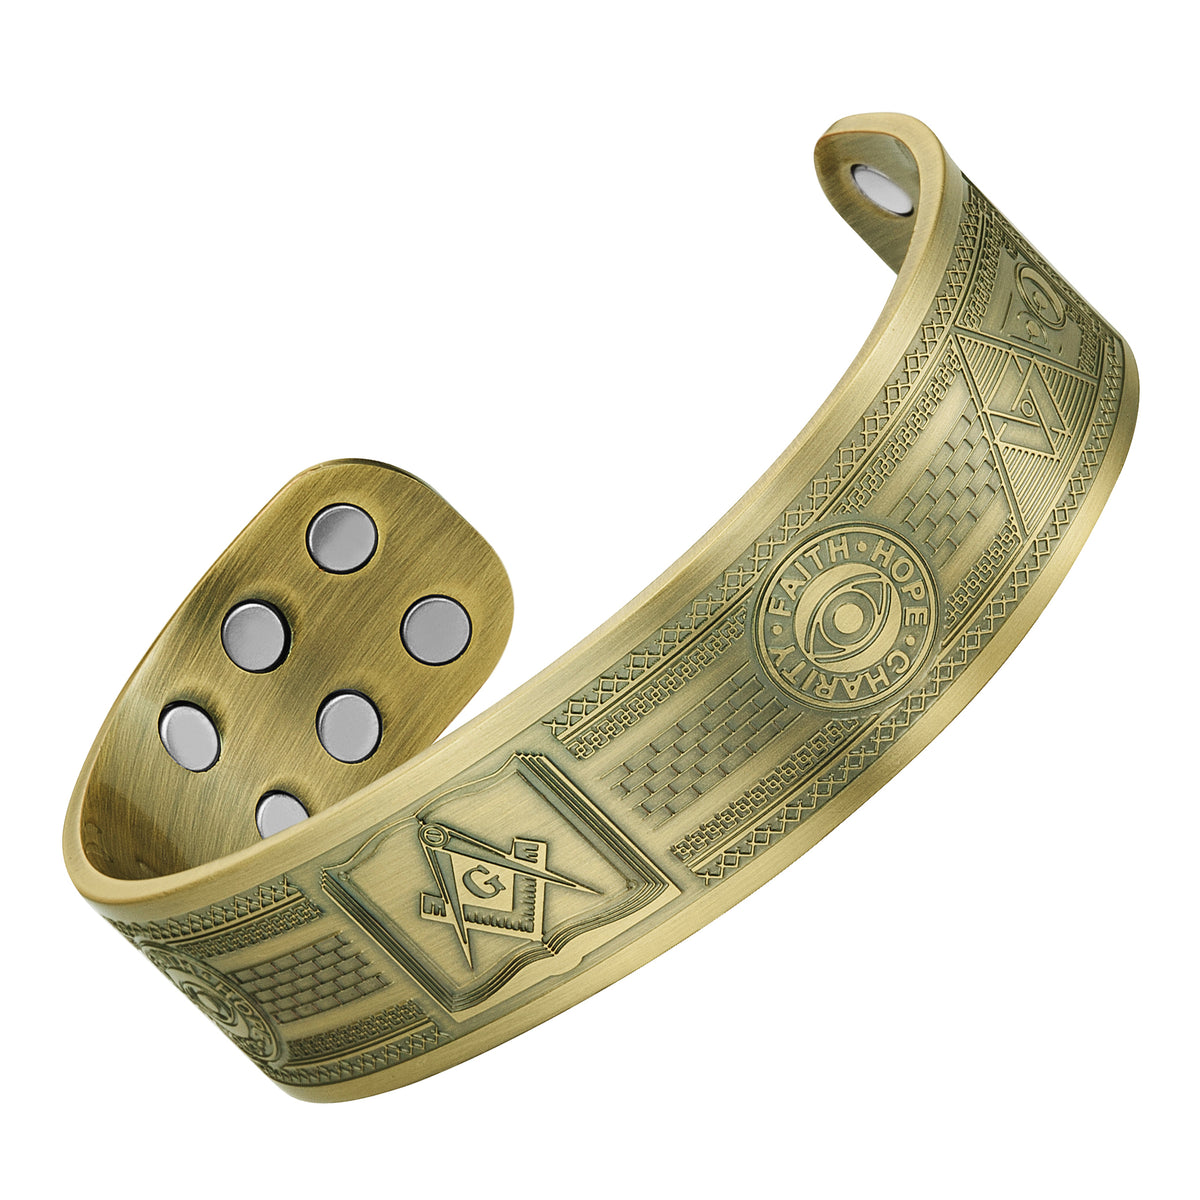 MasonicMan S&amp;C on Bible Pure Copper Bangle Bracelet - Antique Gold Finish